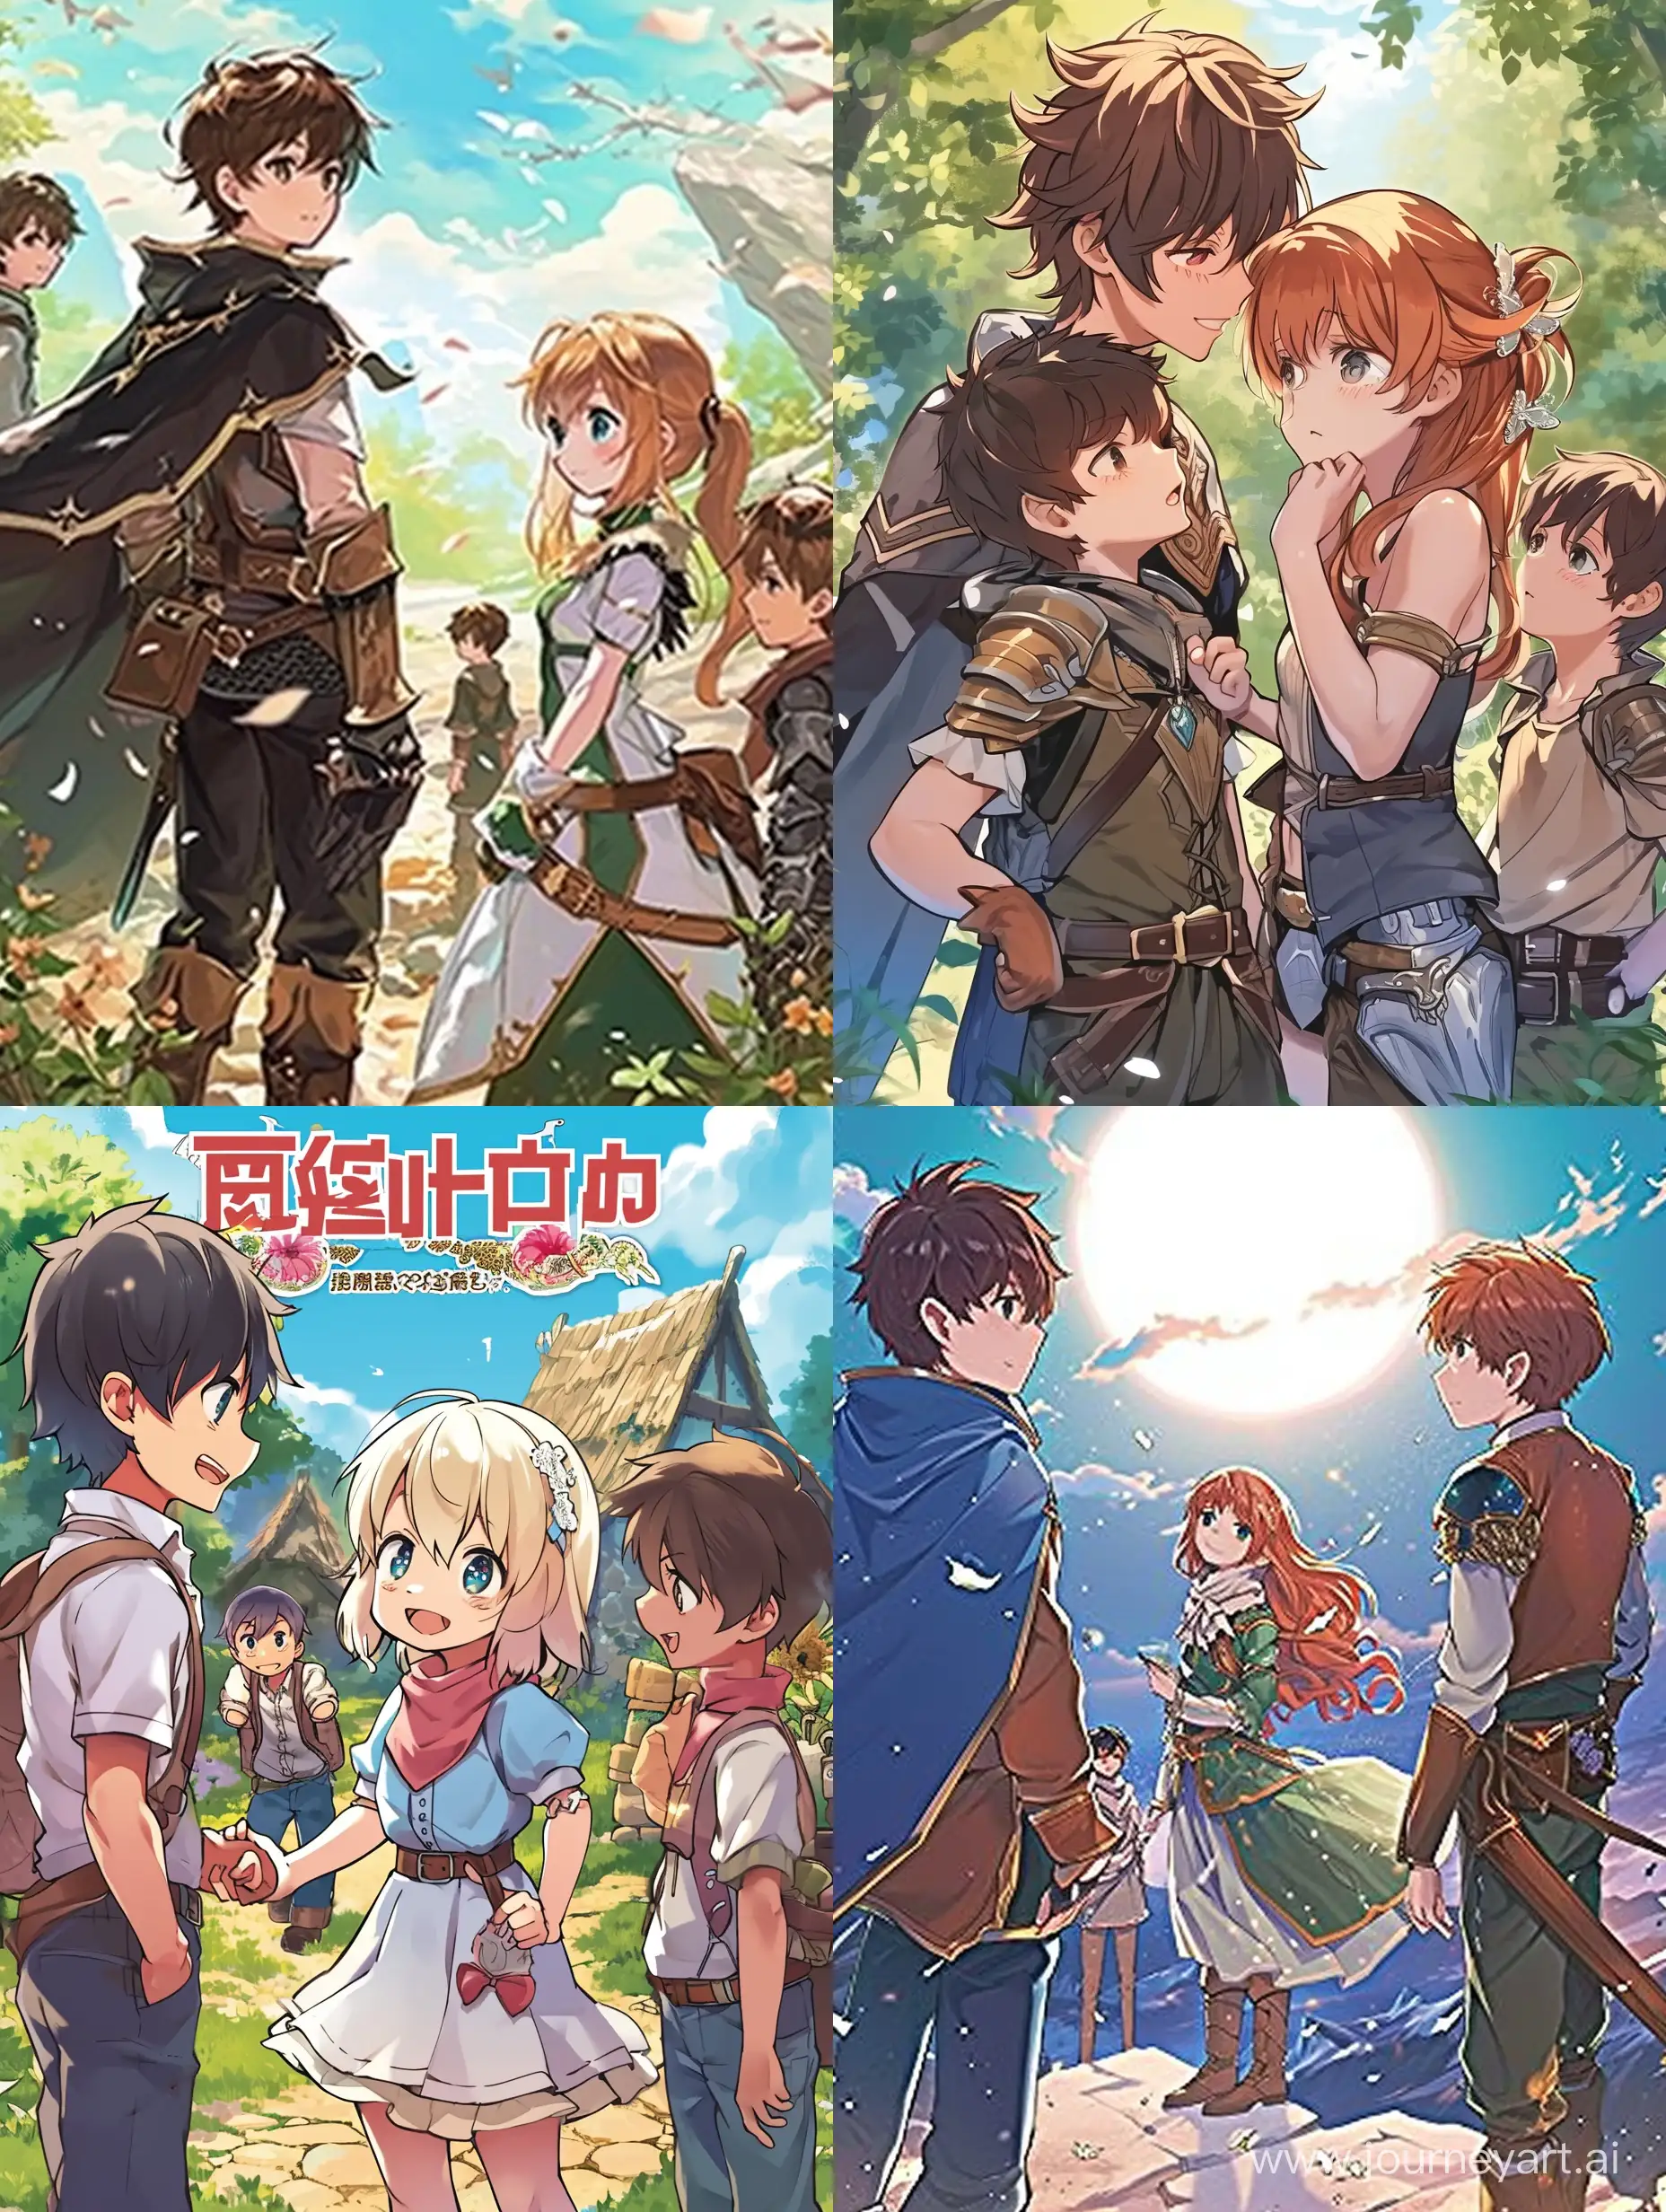 A cover for a light novel, fantasy world, boy and girl, two boys near, anime style.